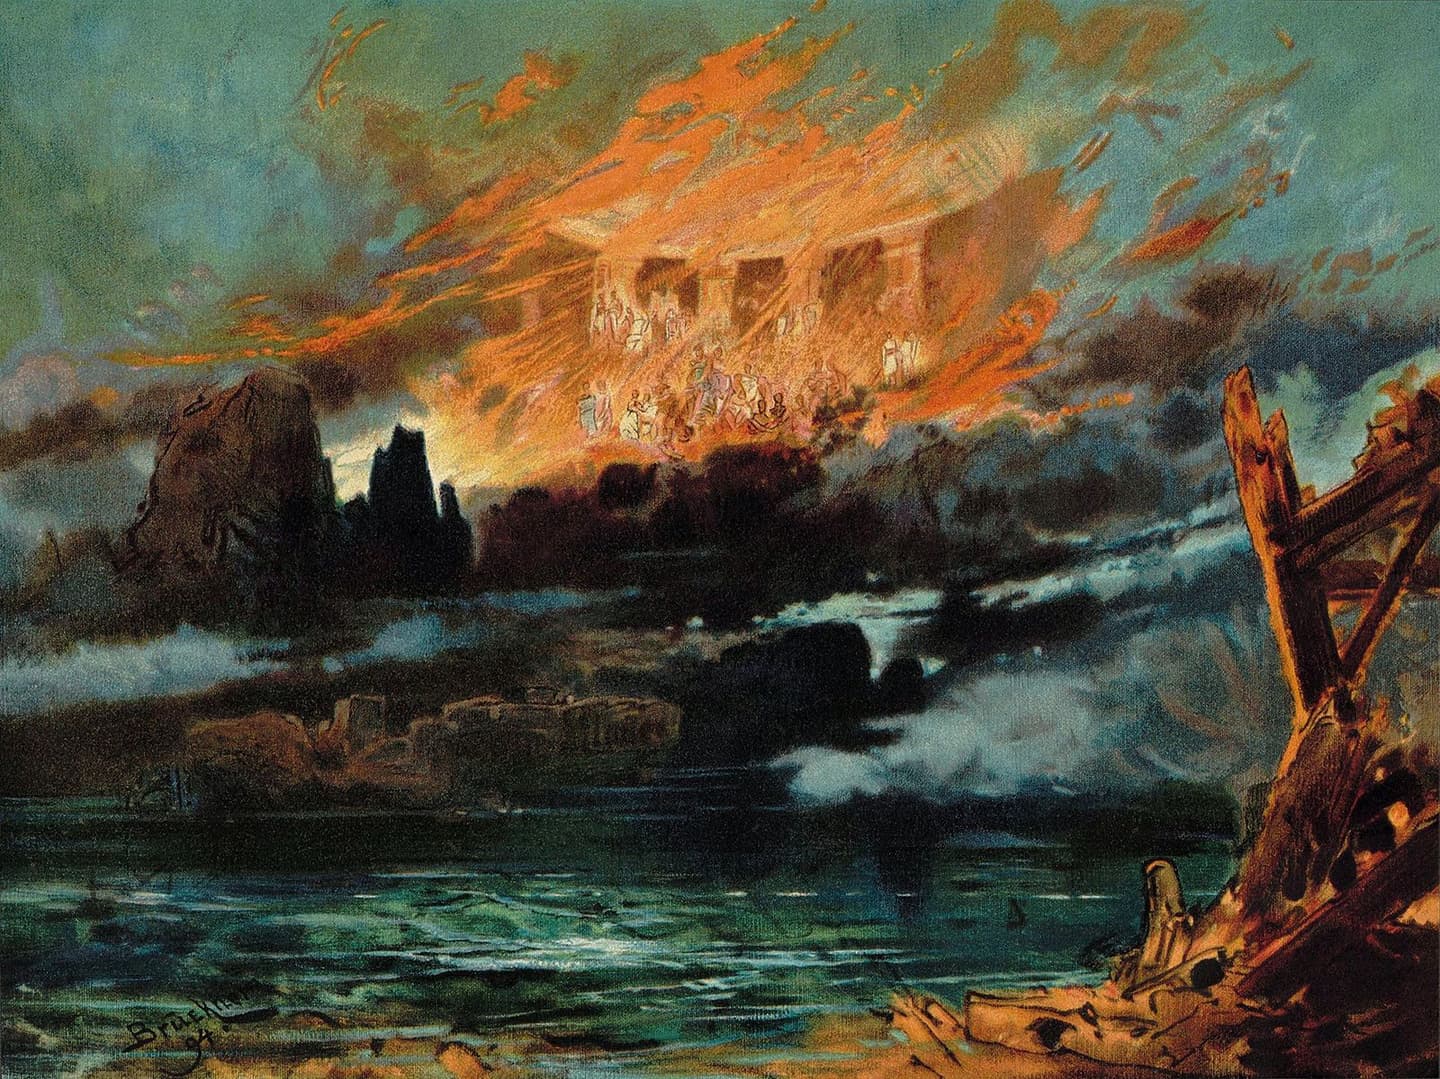 Max Brückner, Valhalla in Flames (1894).